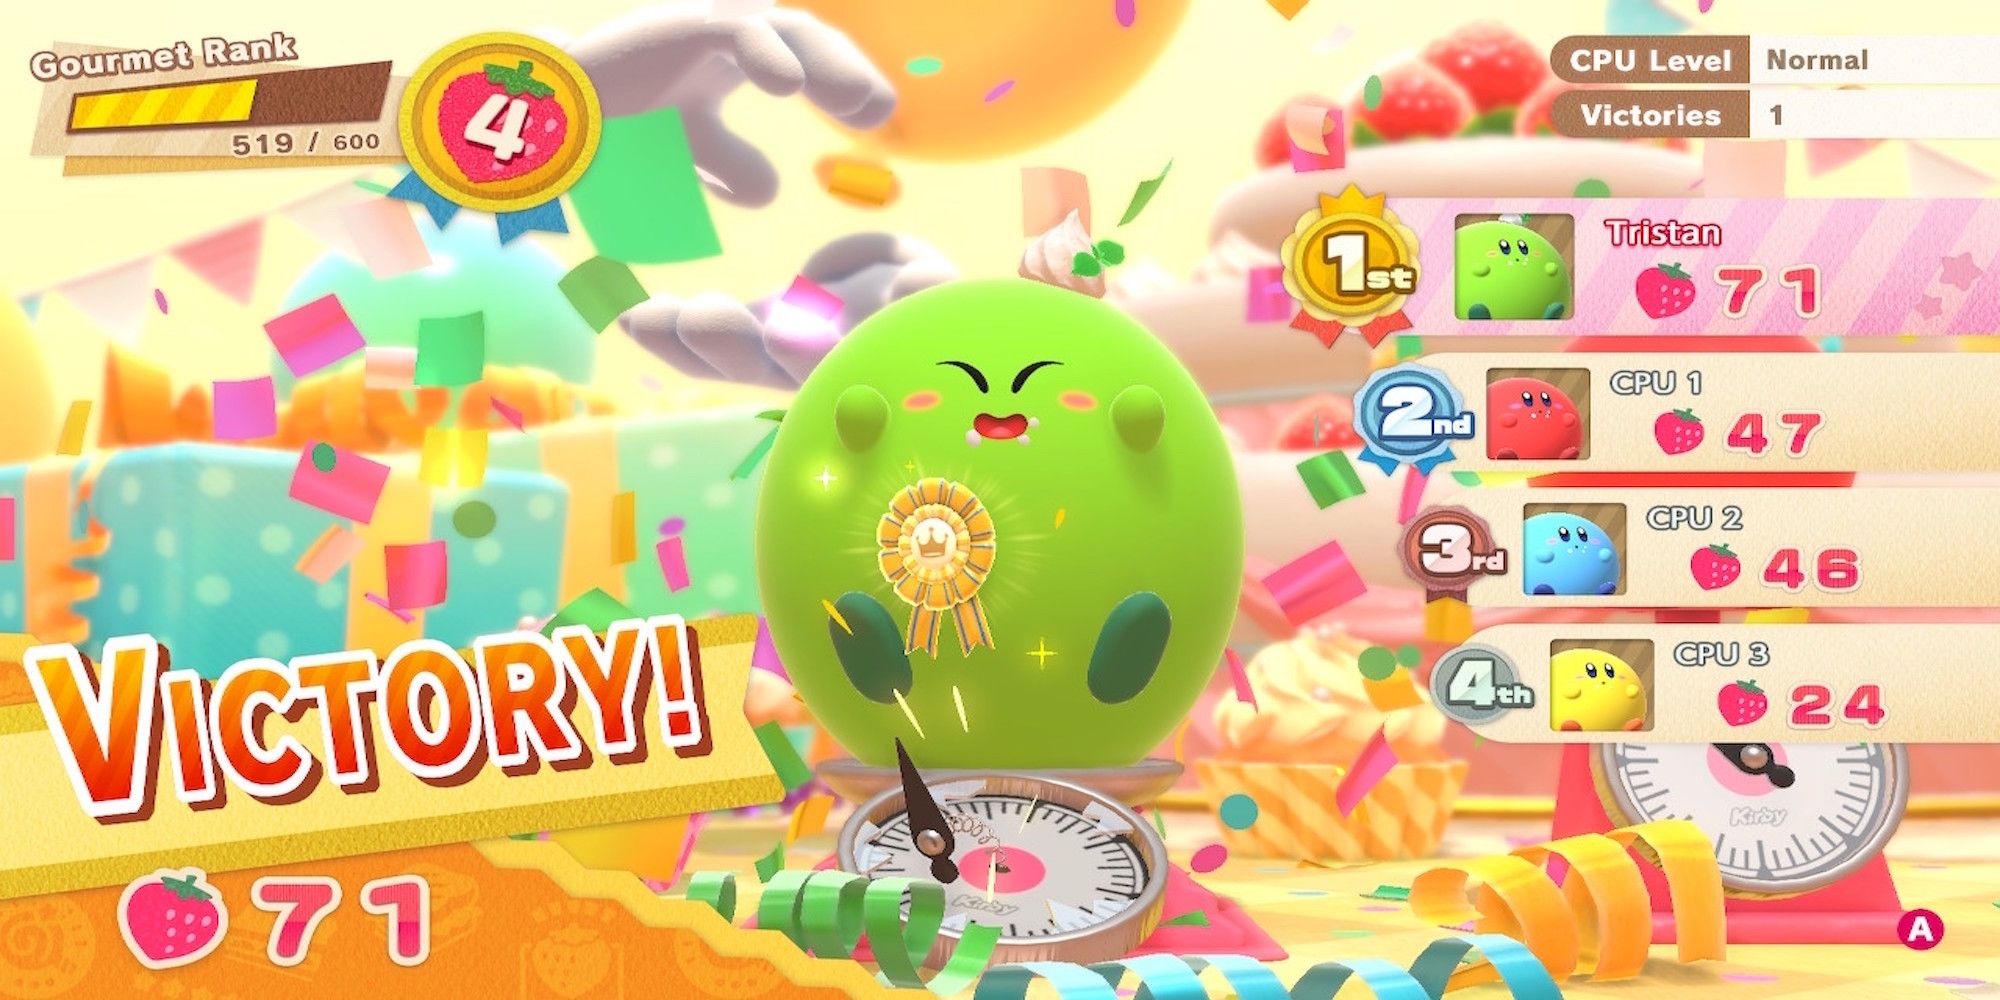 The reward screen in Kirby's Dream Buffet